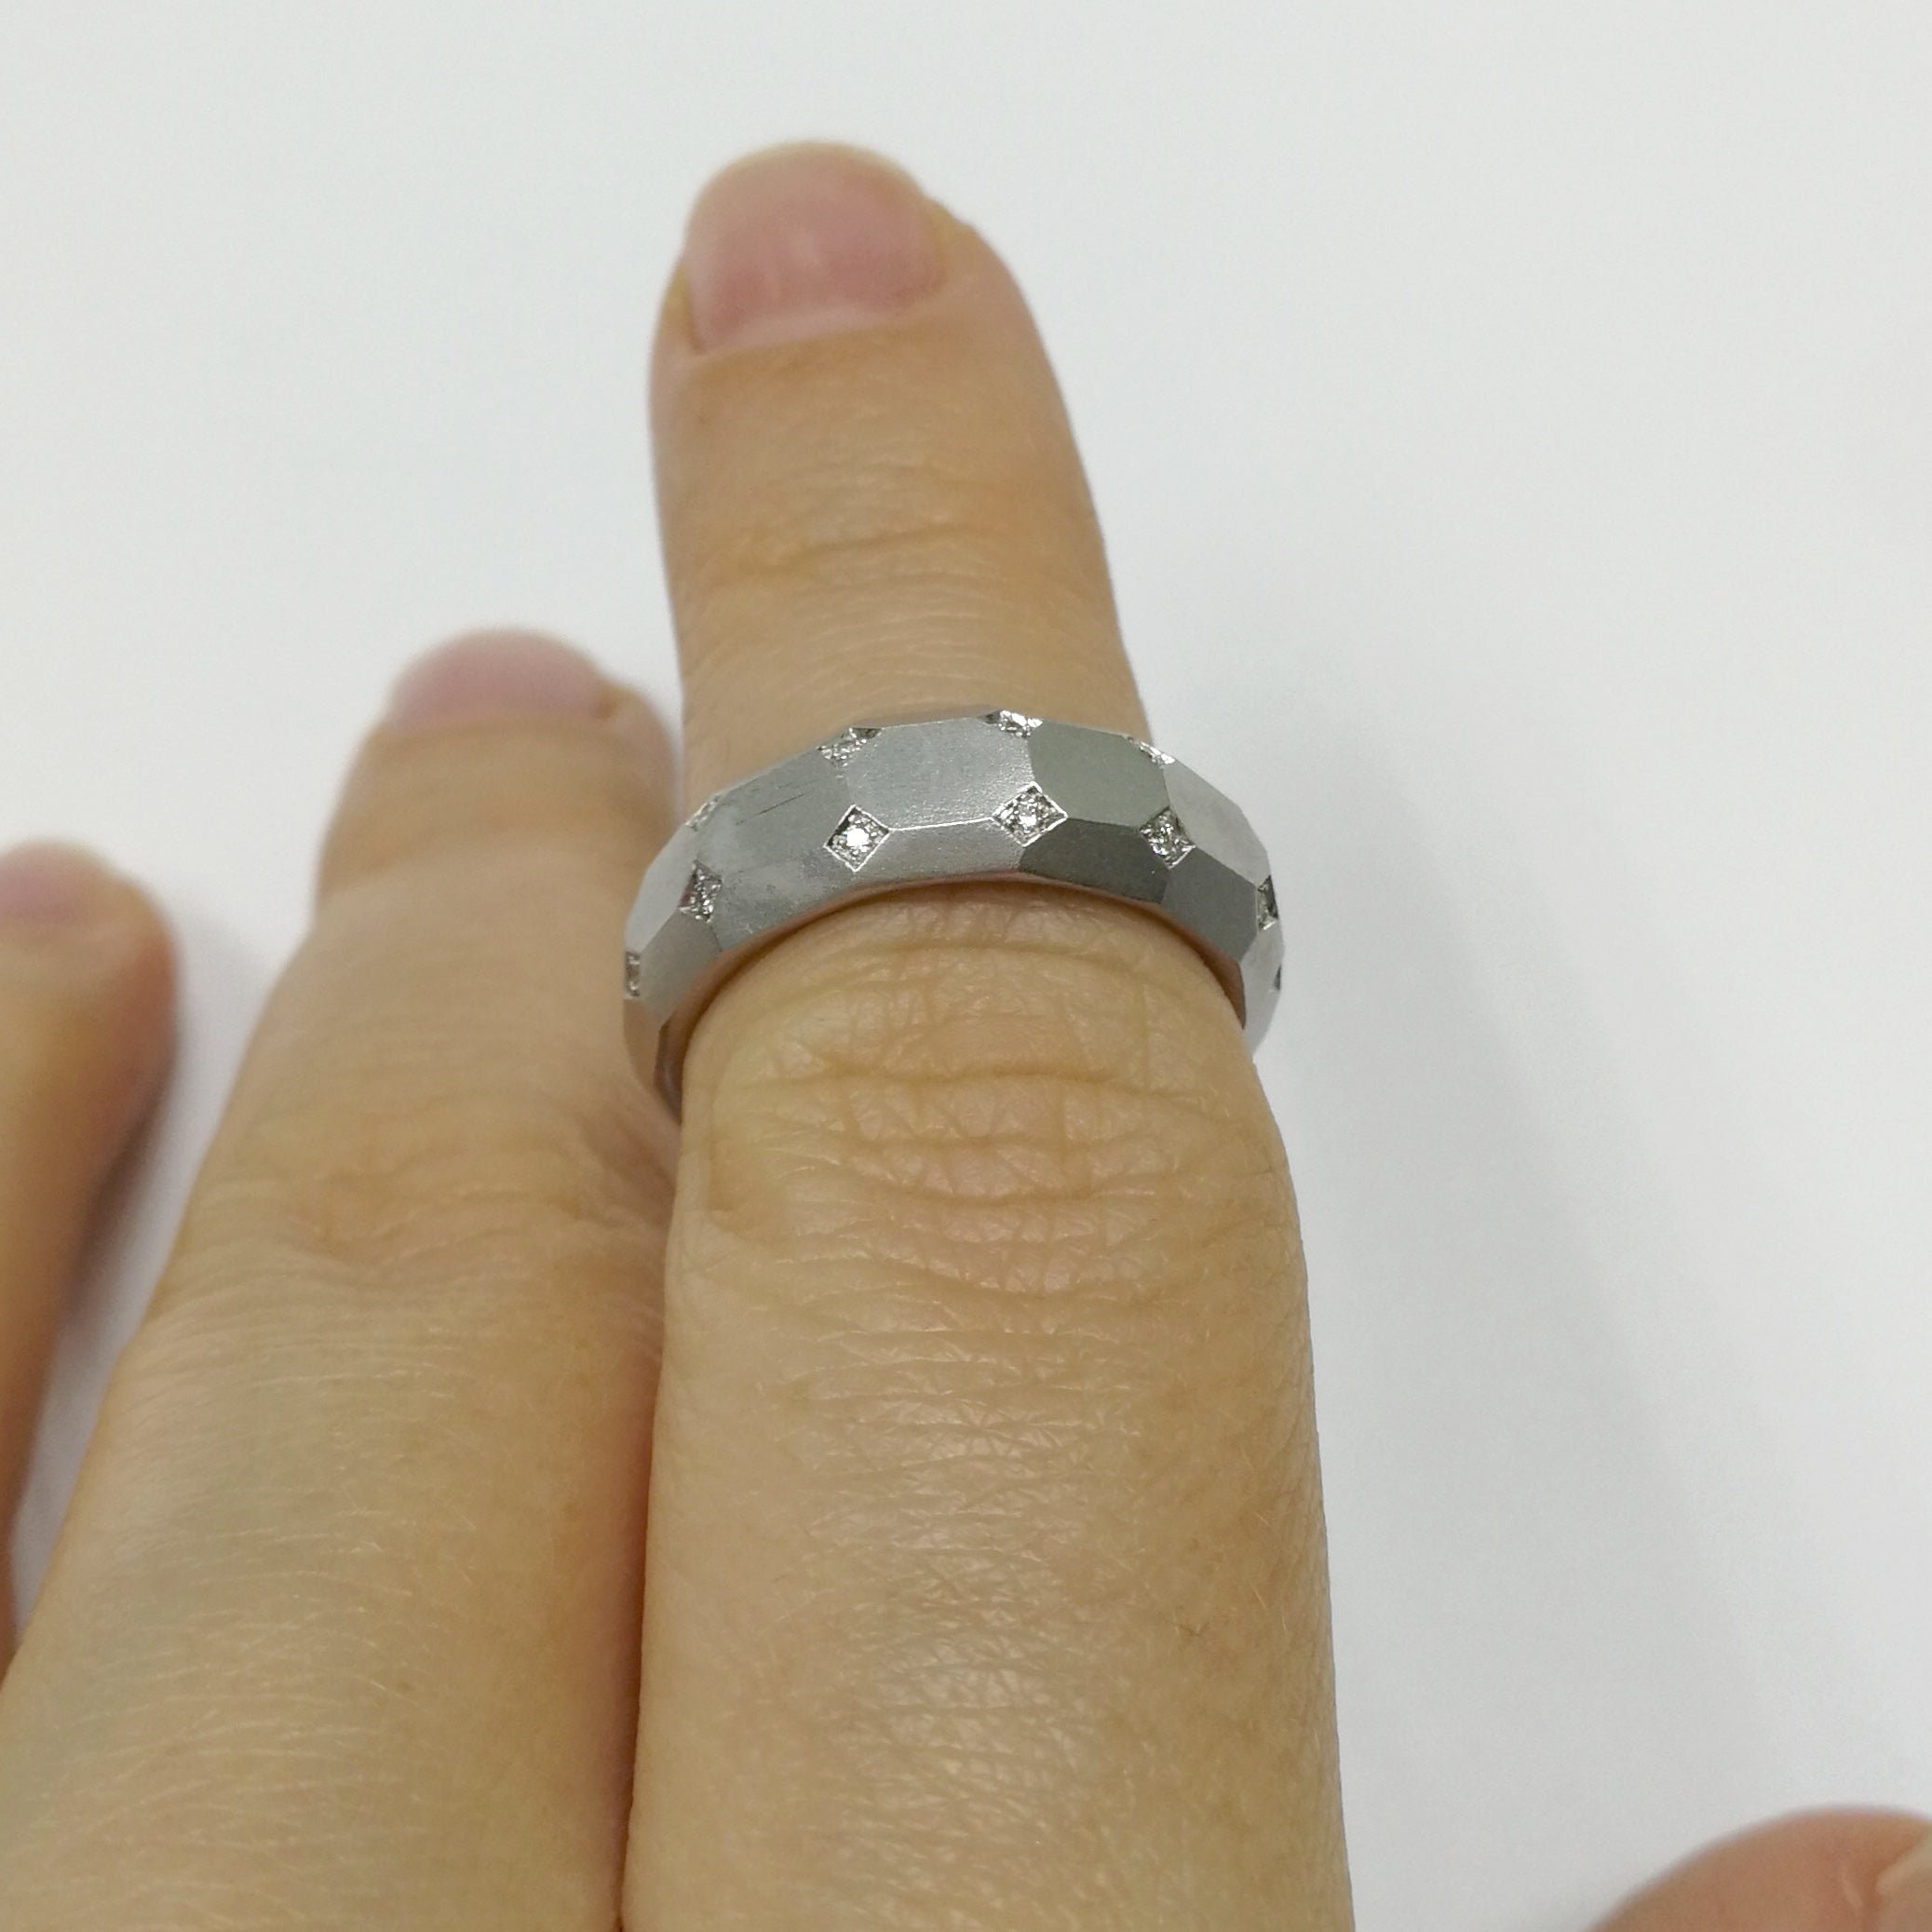 R 0190-3, 18K White Gold, Diamonds Band Ring